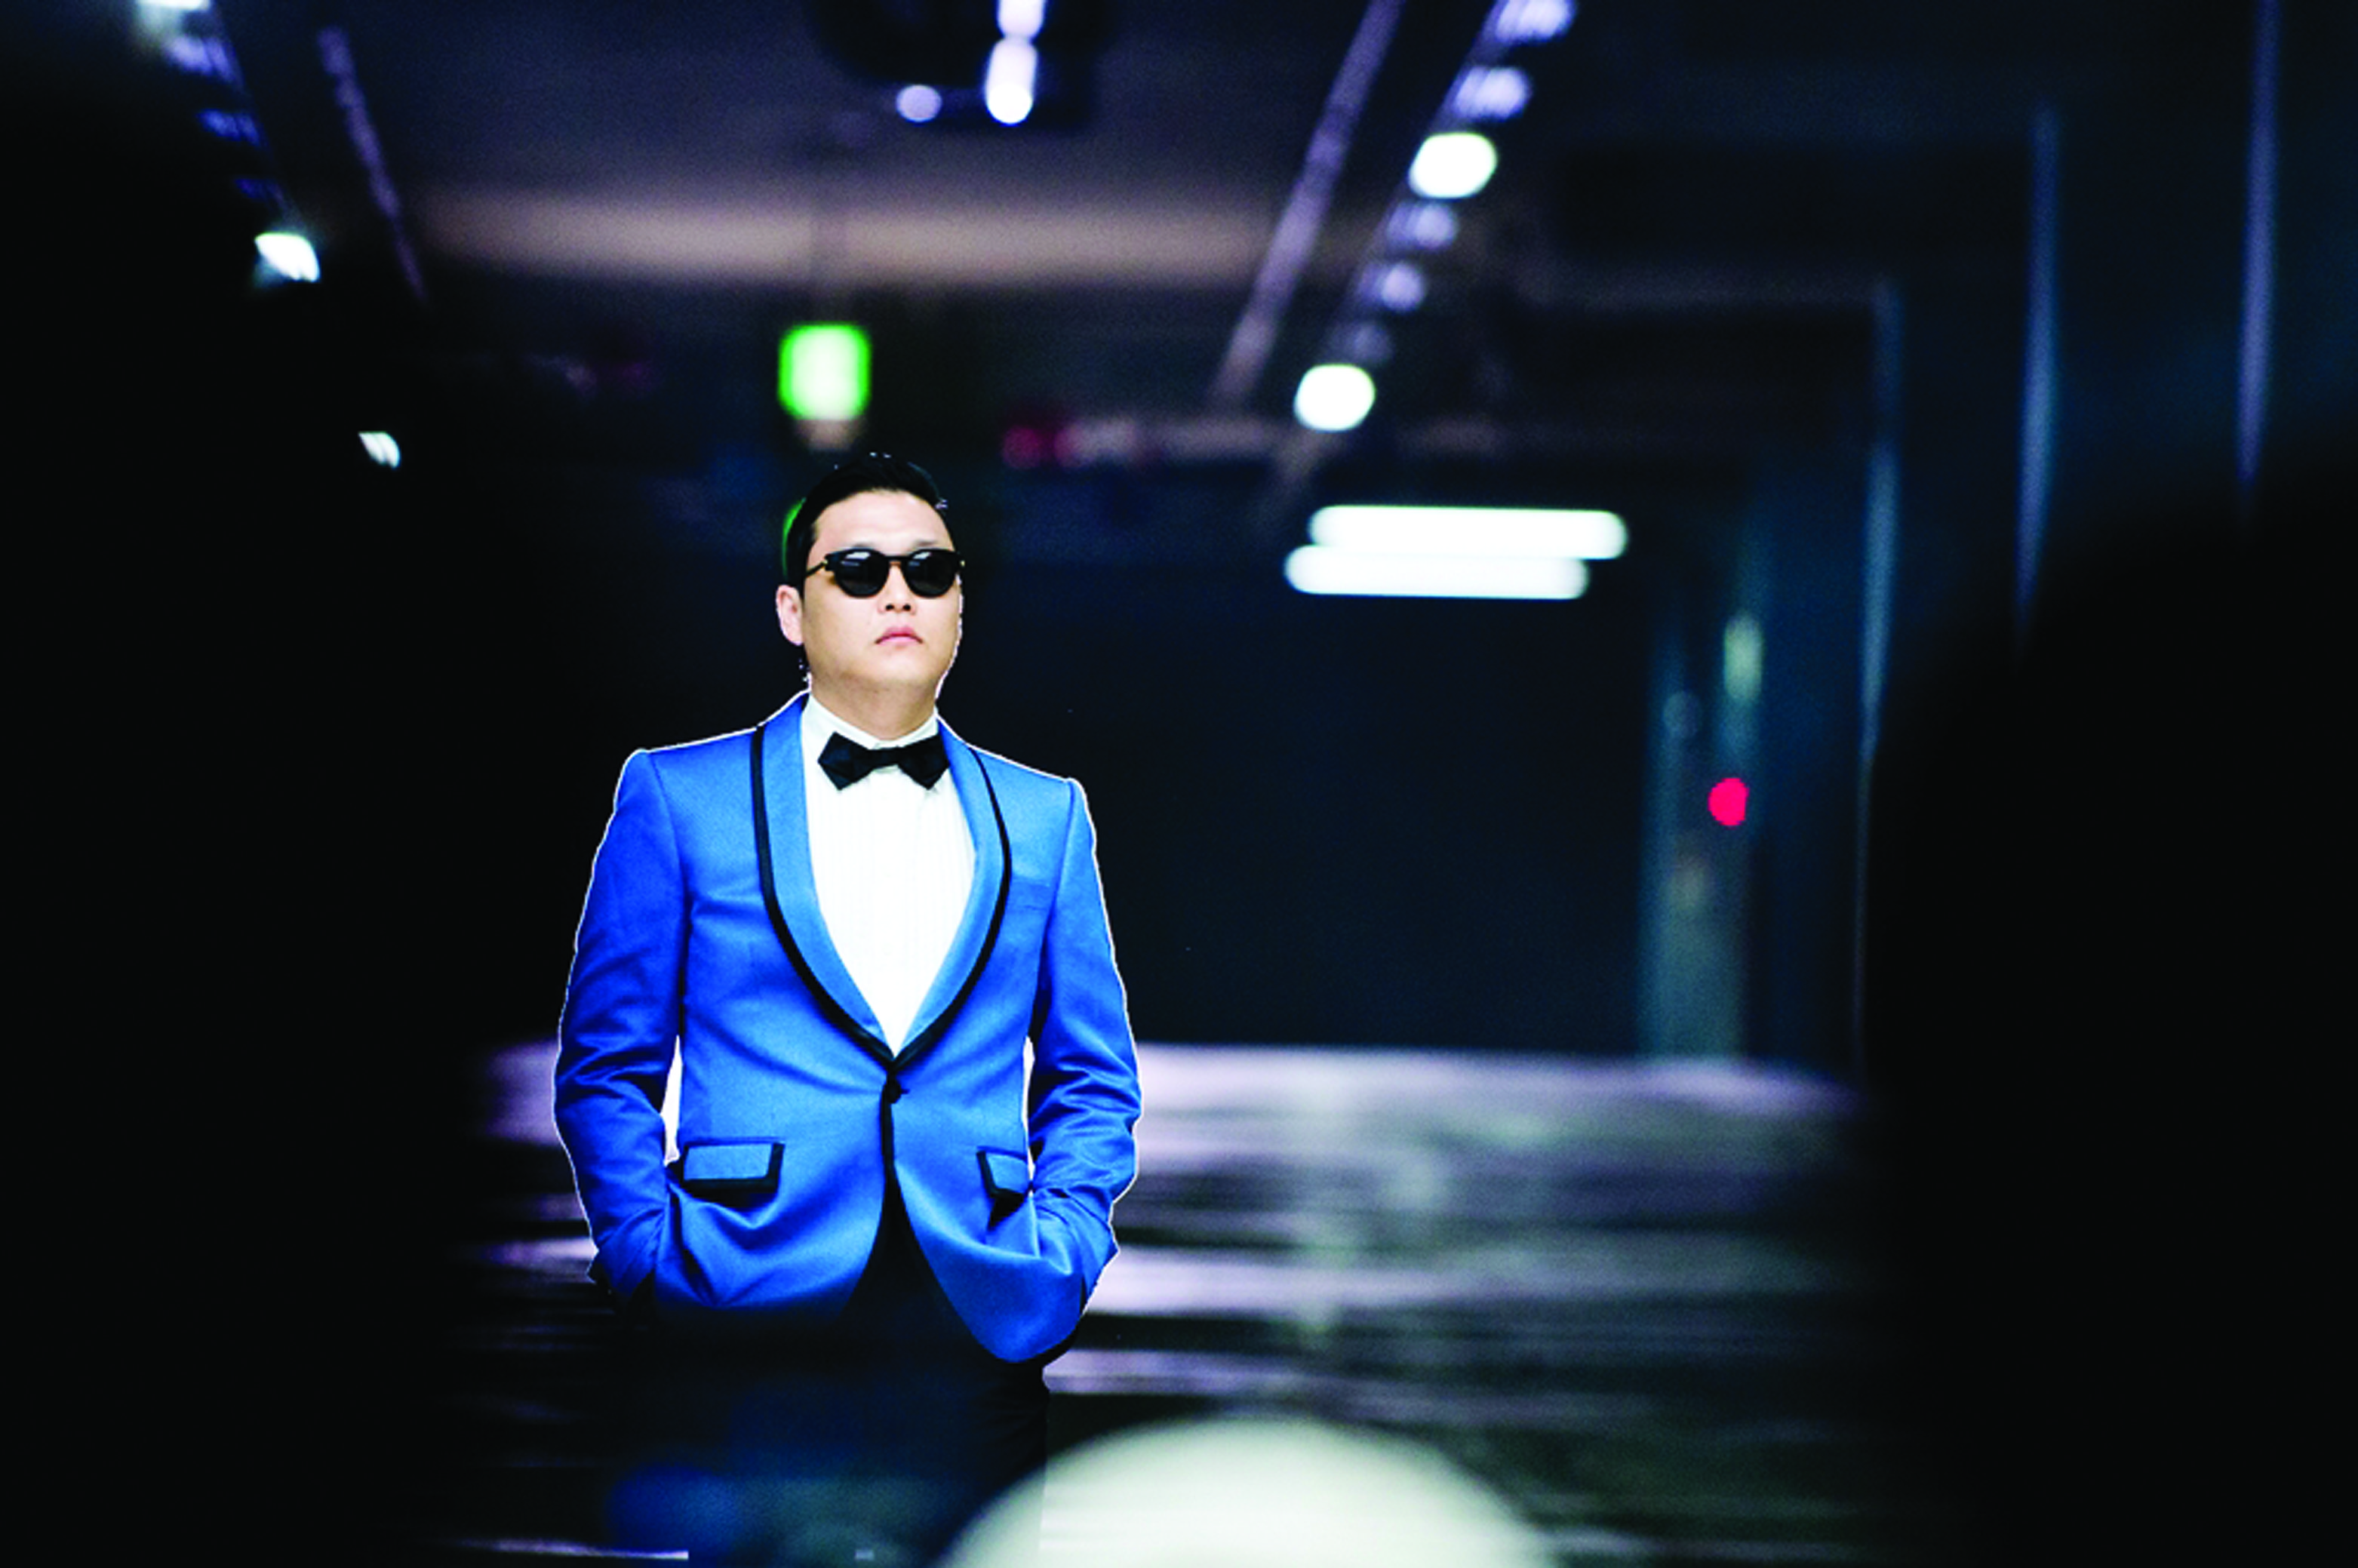 PSY Dancing Artist | Gangnam style, Dance, Dance wallpaper